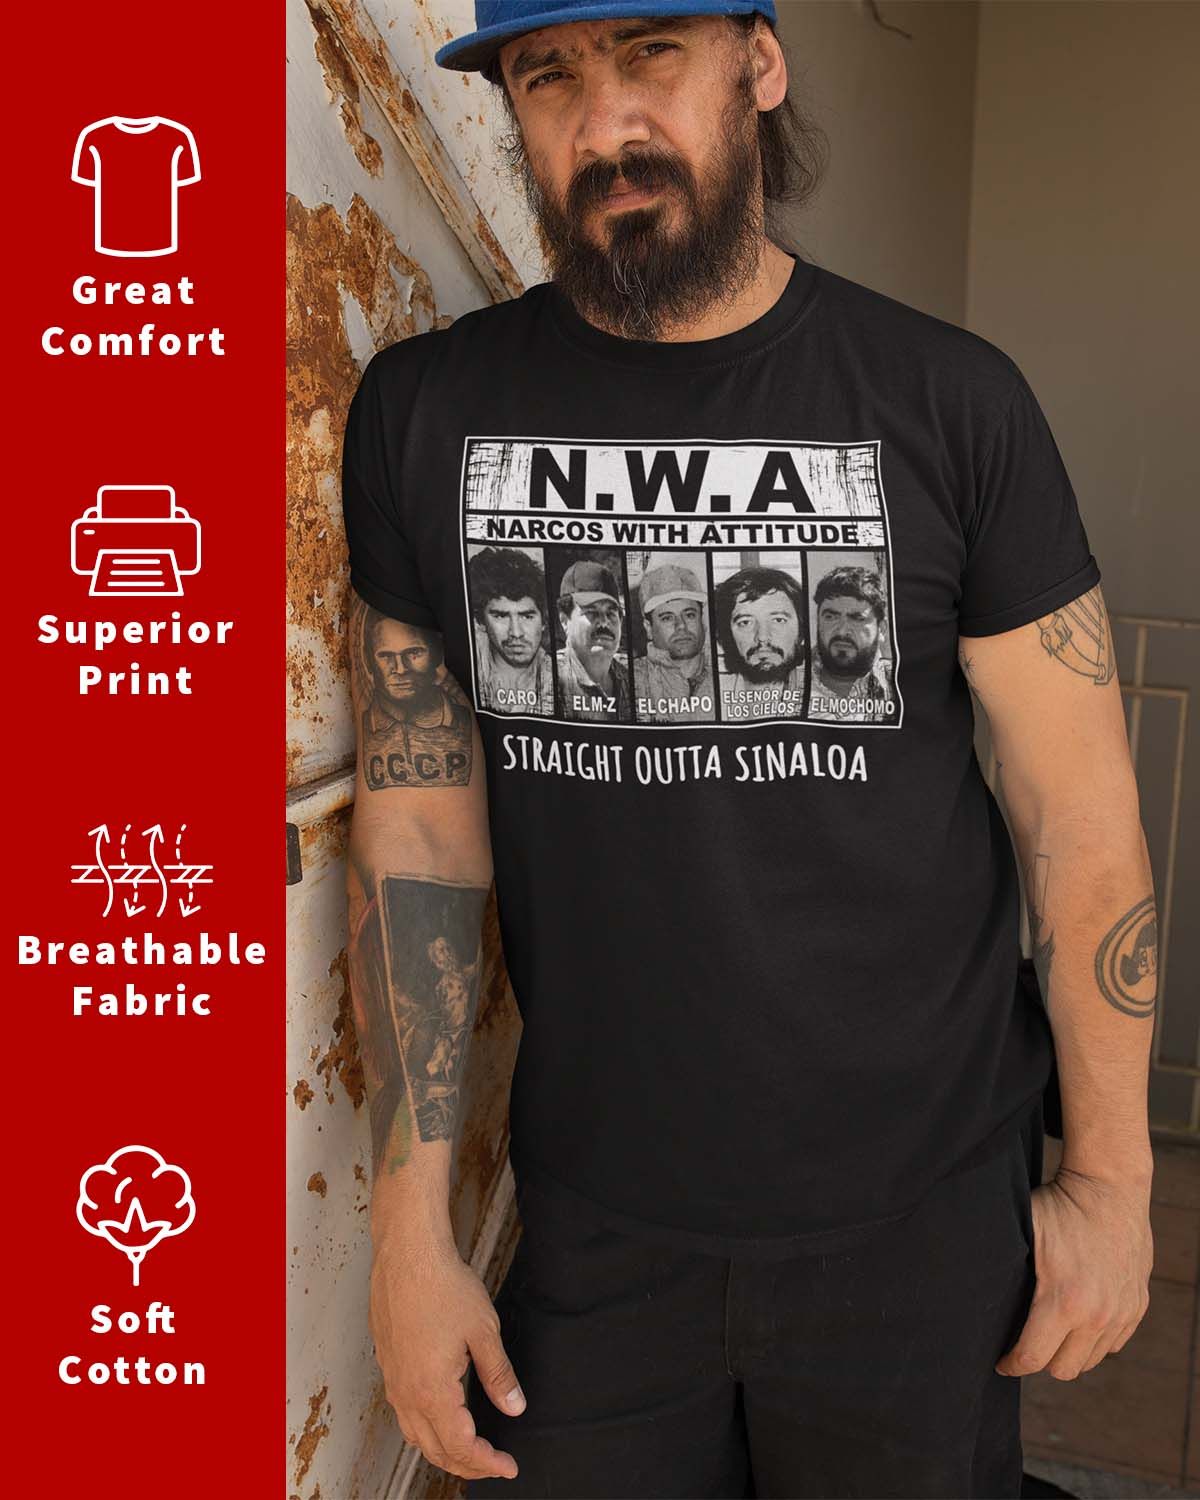 ShirtBANC Cartel Mens N.W.A. Narcos With Attitude Shirt Straight Outta Sinaloa - image 2 of 6